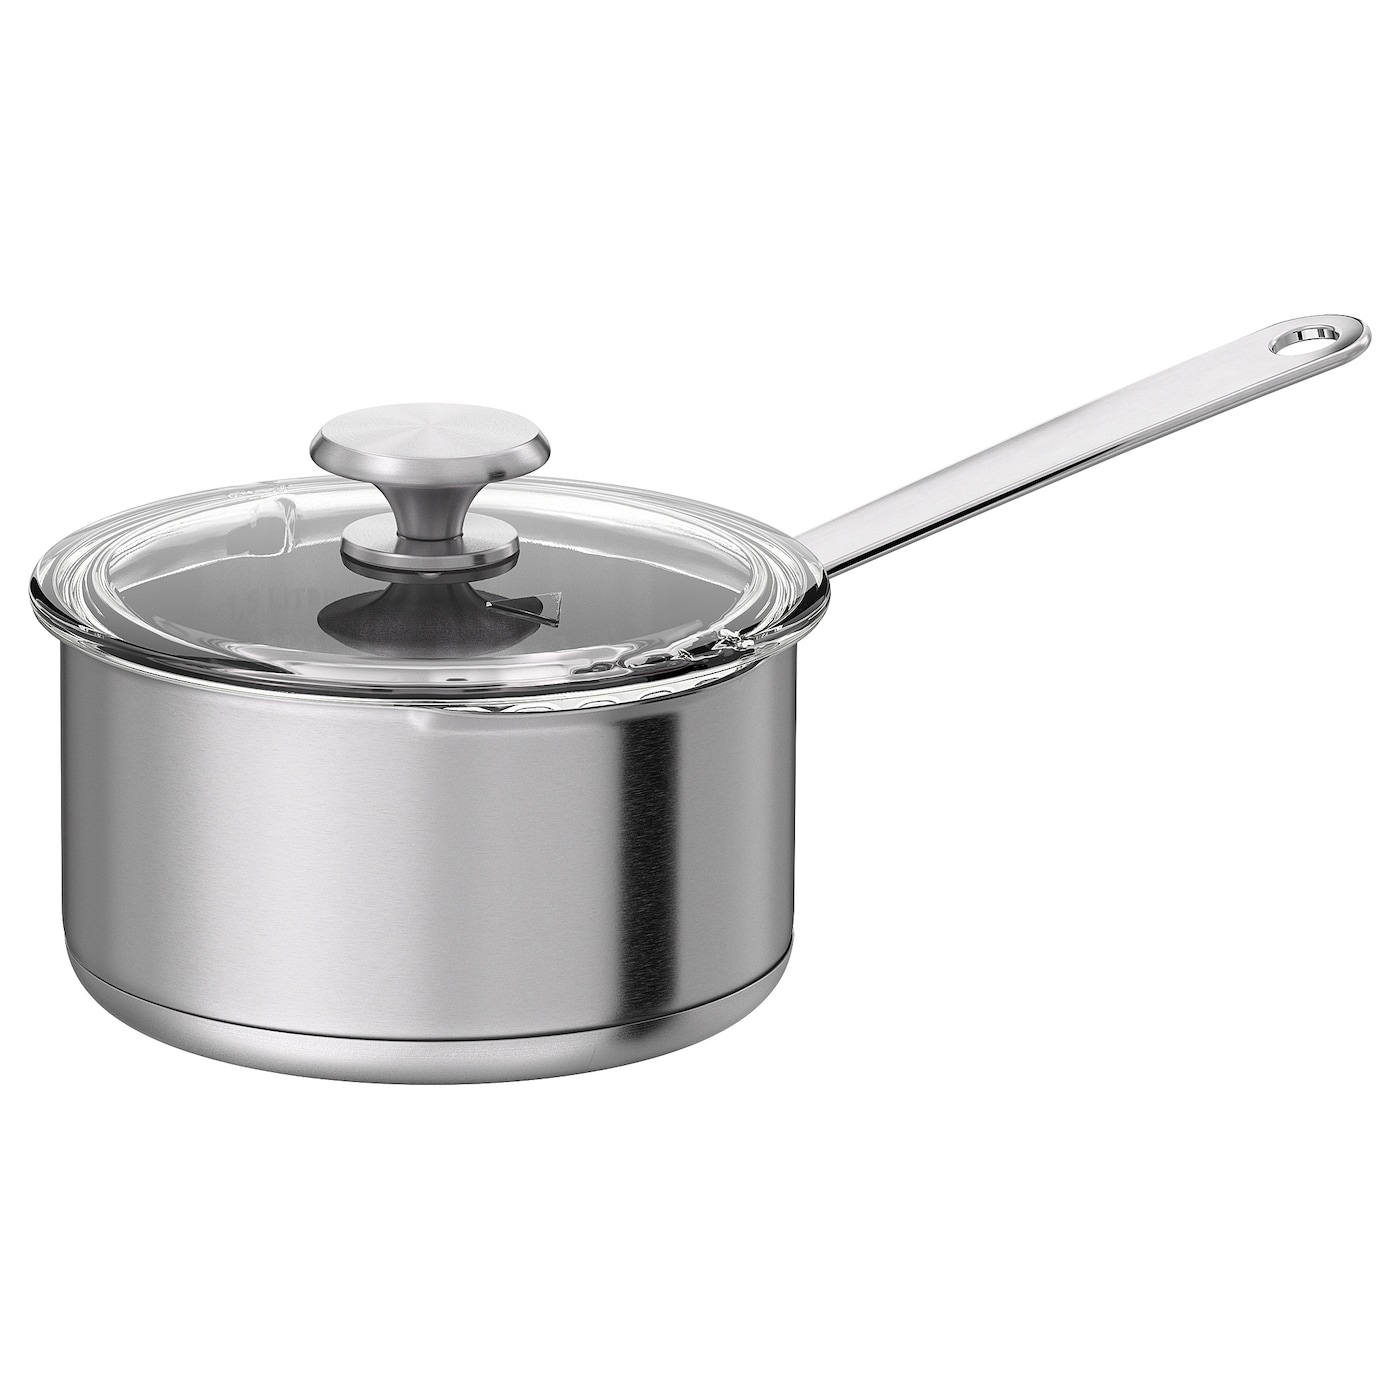 HEMKOMST saucepan with lid stainless steel/glass - IKEA